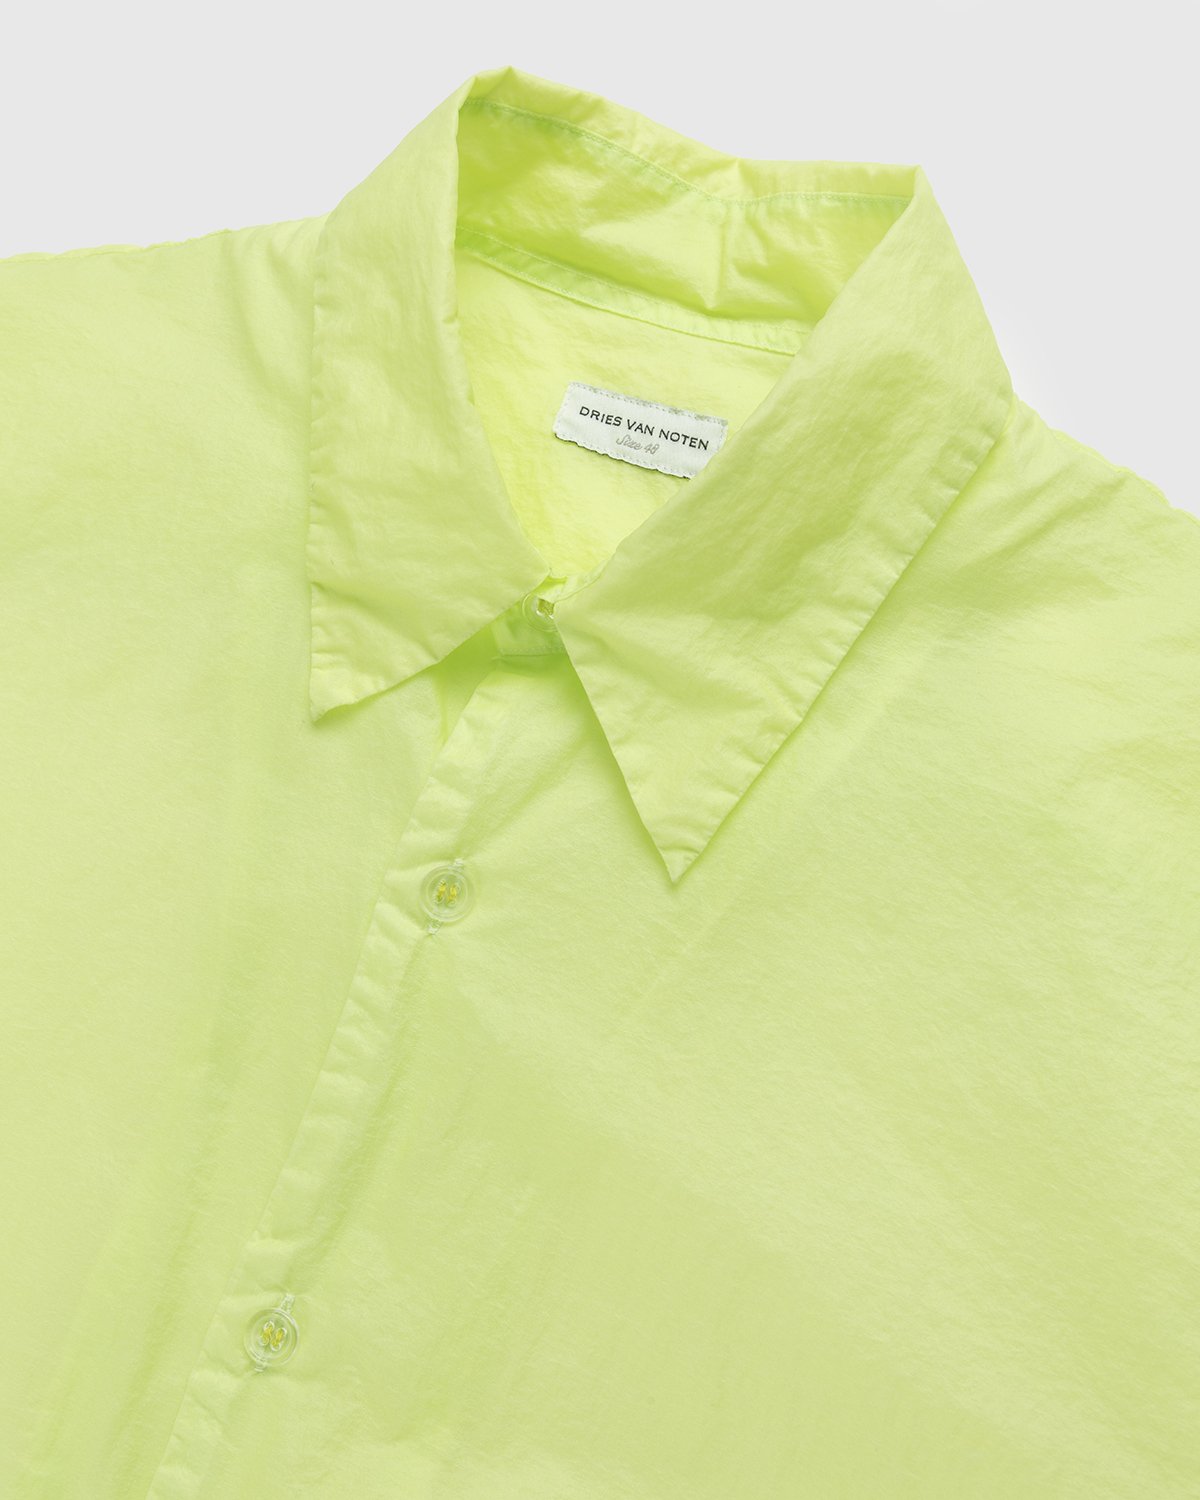 Dries van Noten - Clasen Shirt Lime - Clothing - Green - Image 4